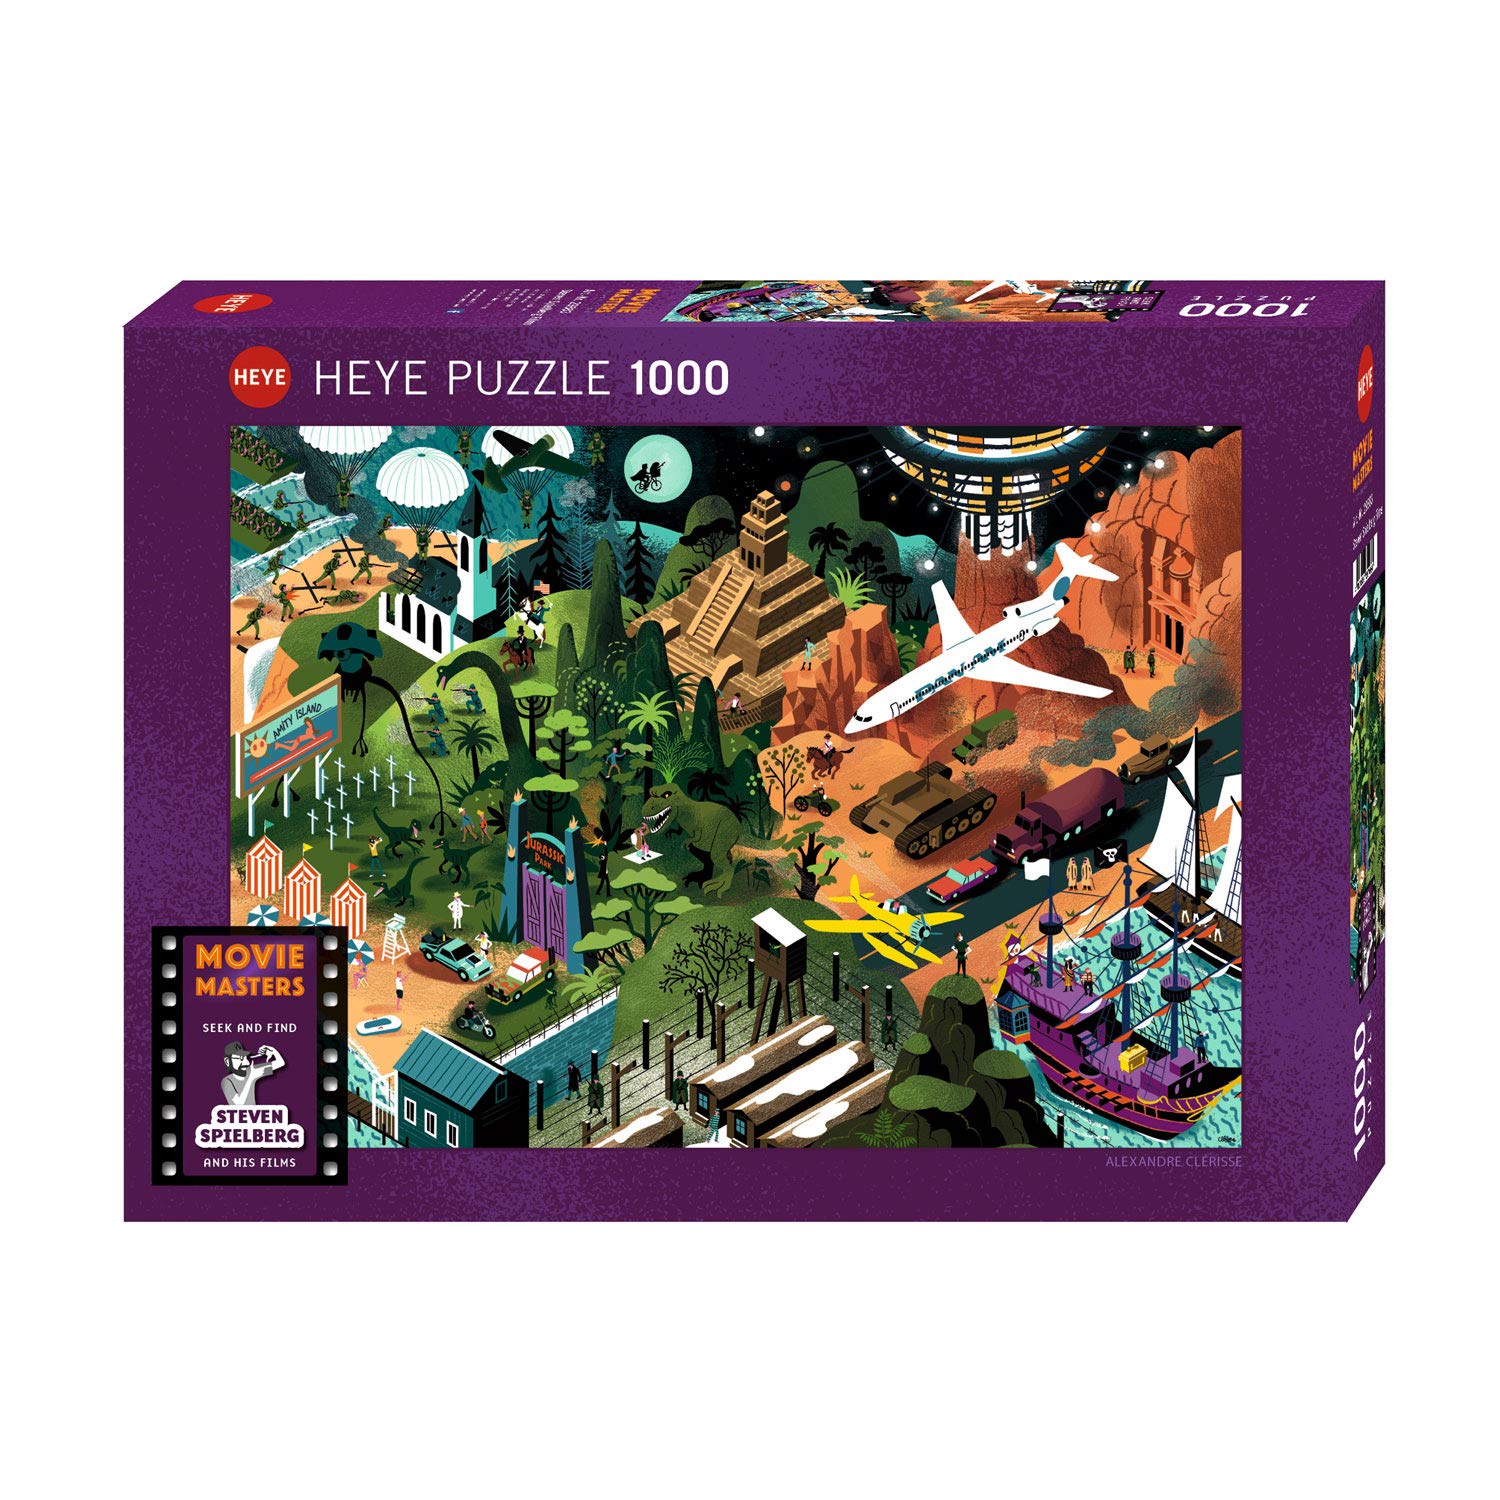 Heye Puzzles - Movie Masters - Steven Spielberg Films 1000 Piece Puzzle - The Puzzle Nerds